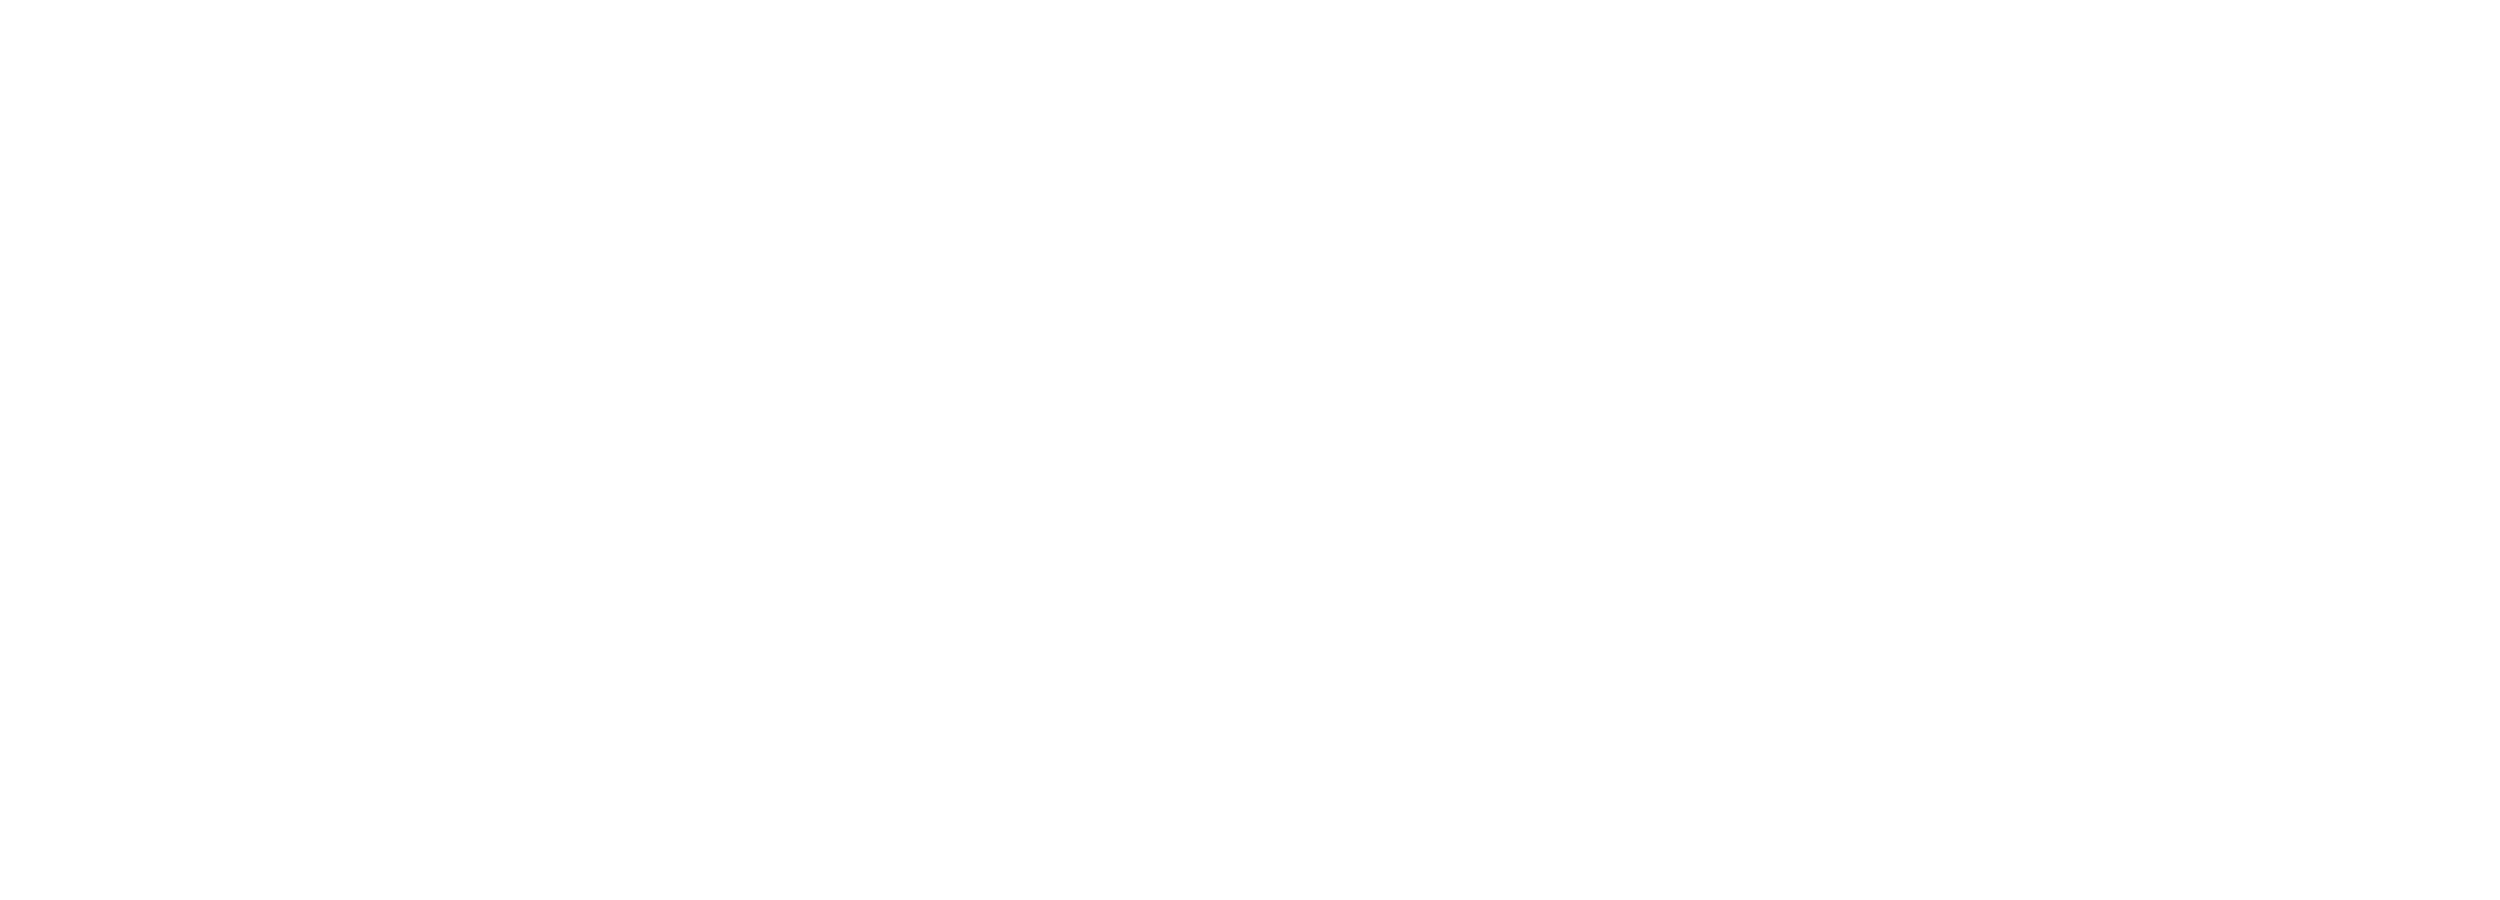 Beach Club on Madison